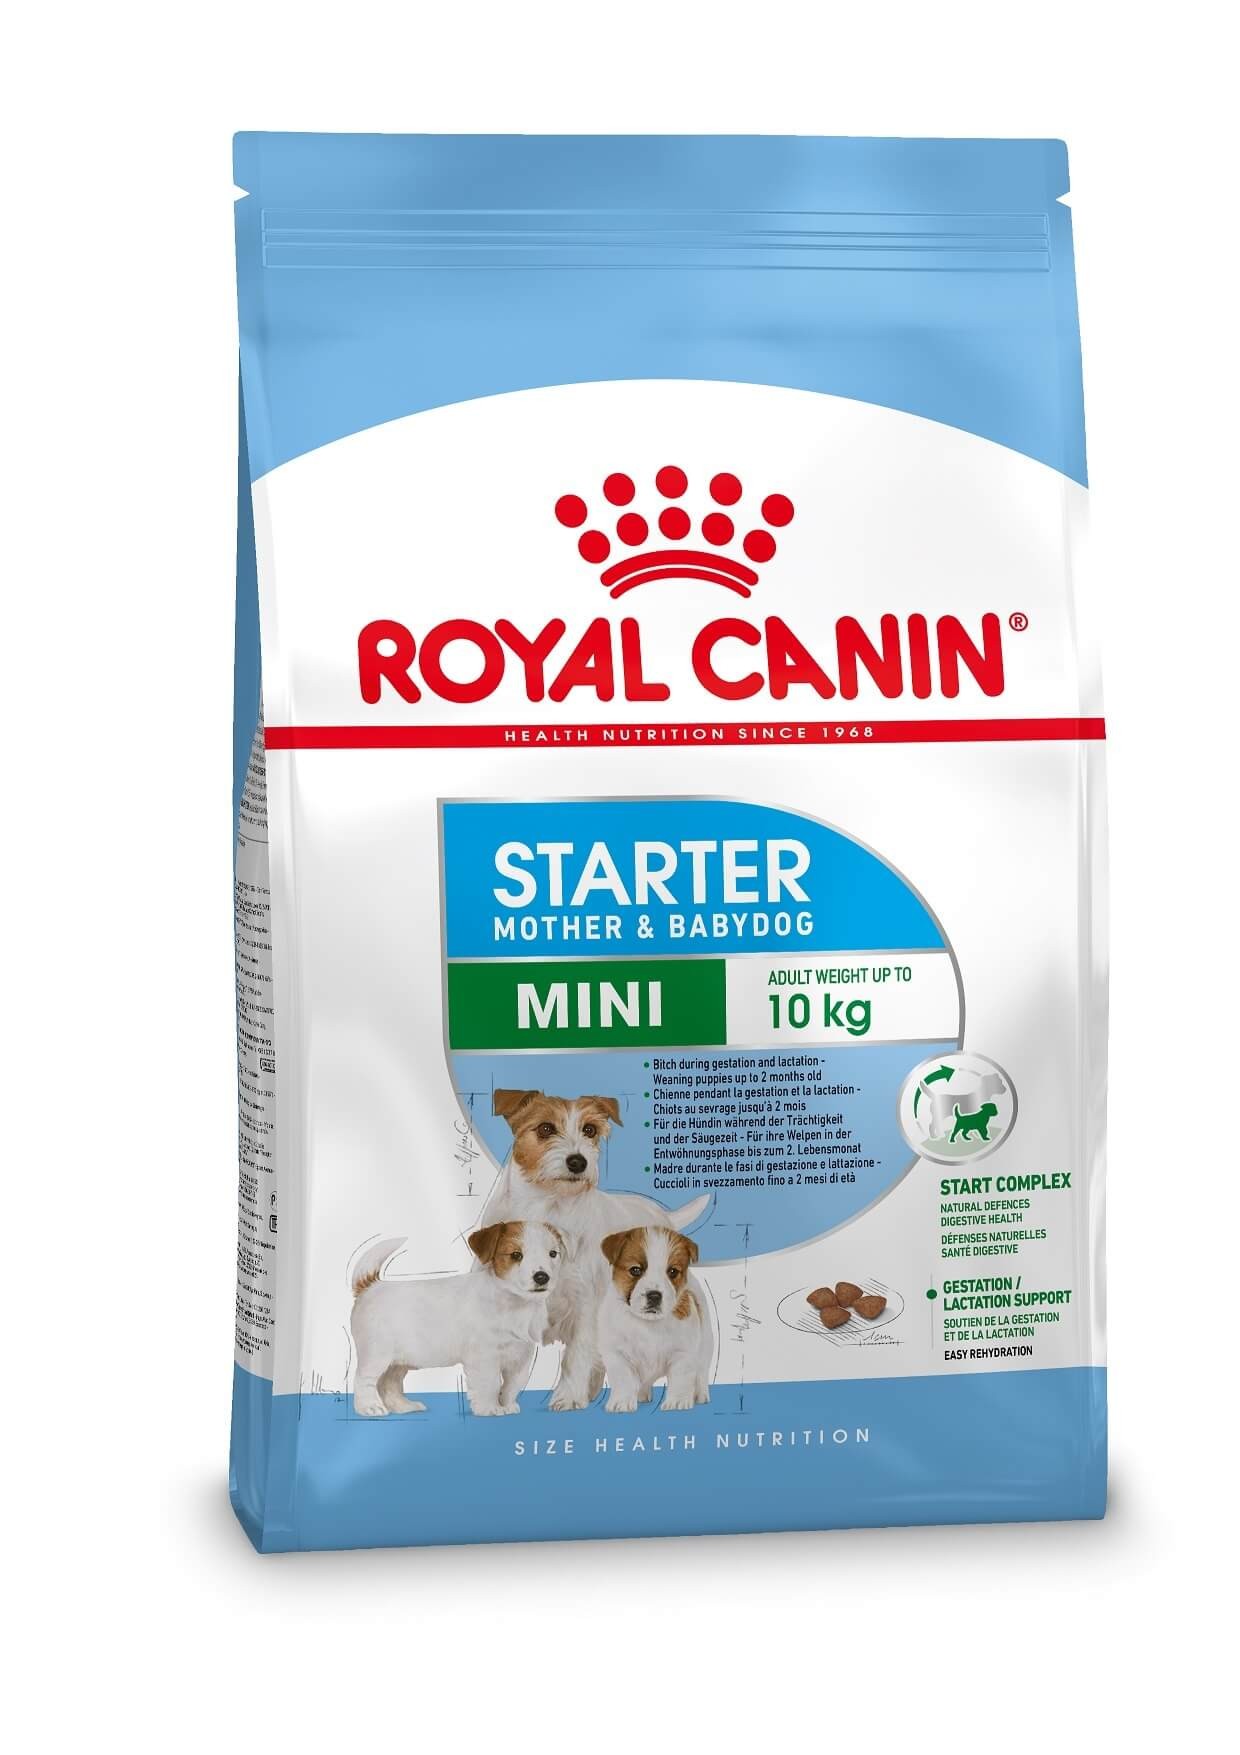 Bild von 8 kg Royal Canin Mini Starter